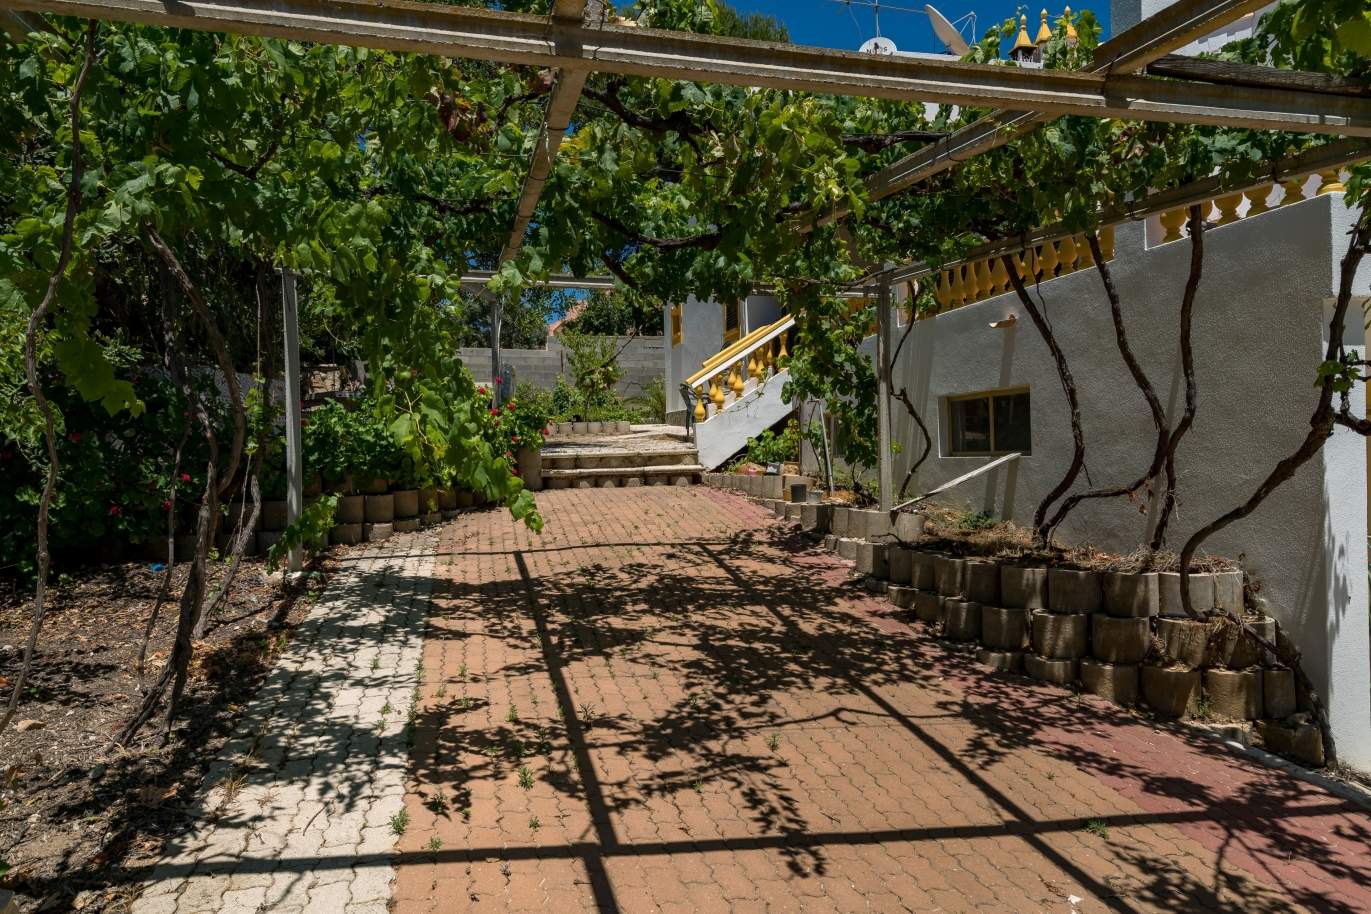 4 Bedroom Villa with plot of land, sale, Albufeira, Algarve, Portugal_143781